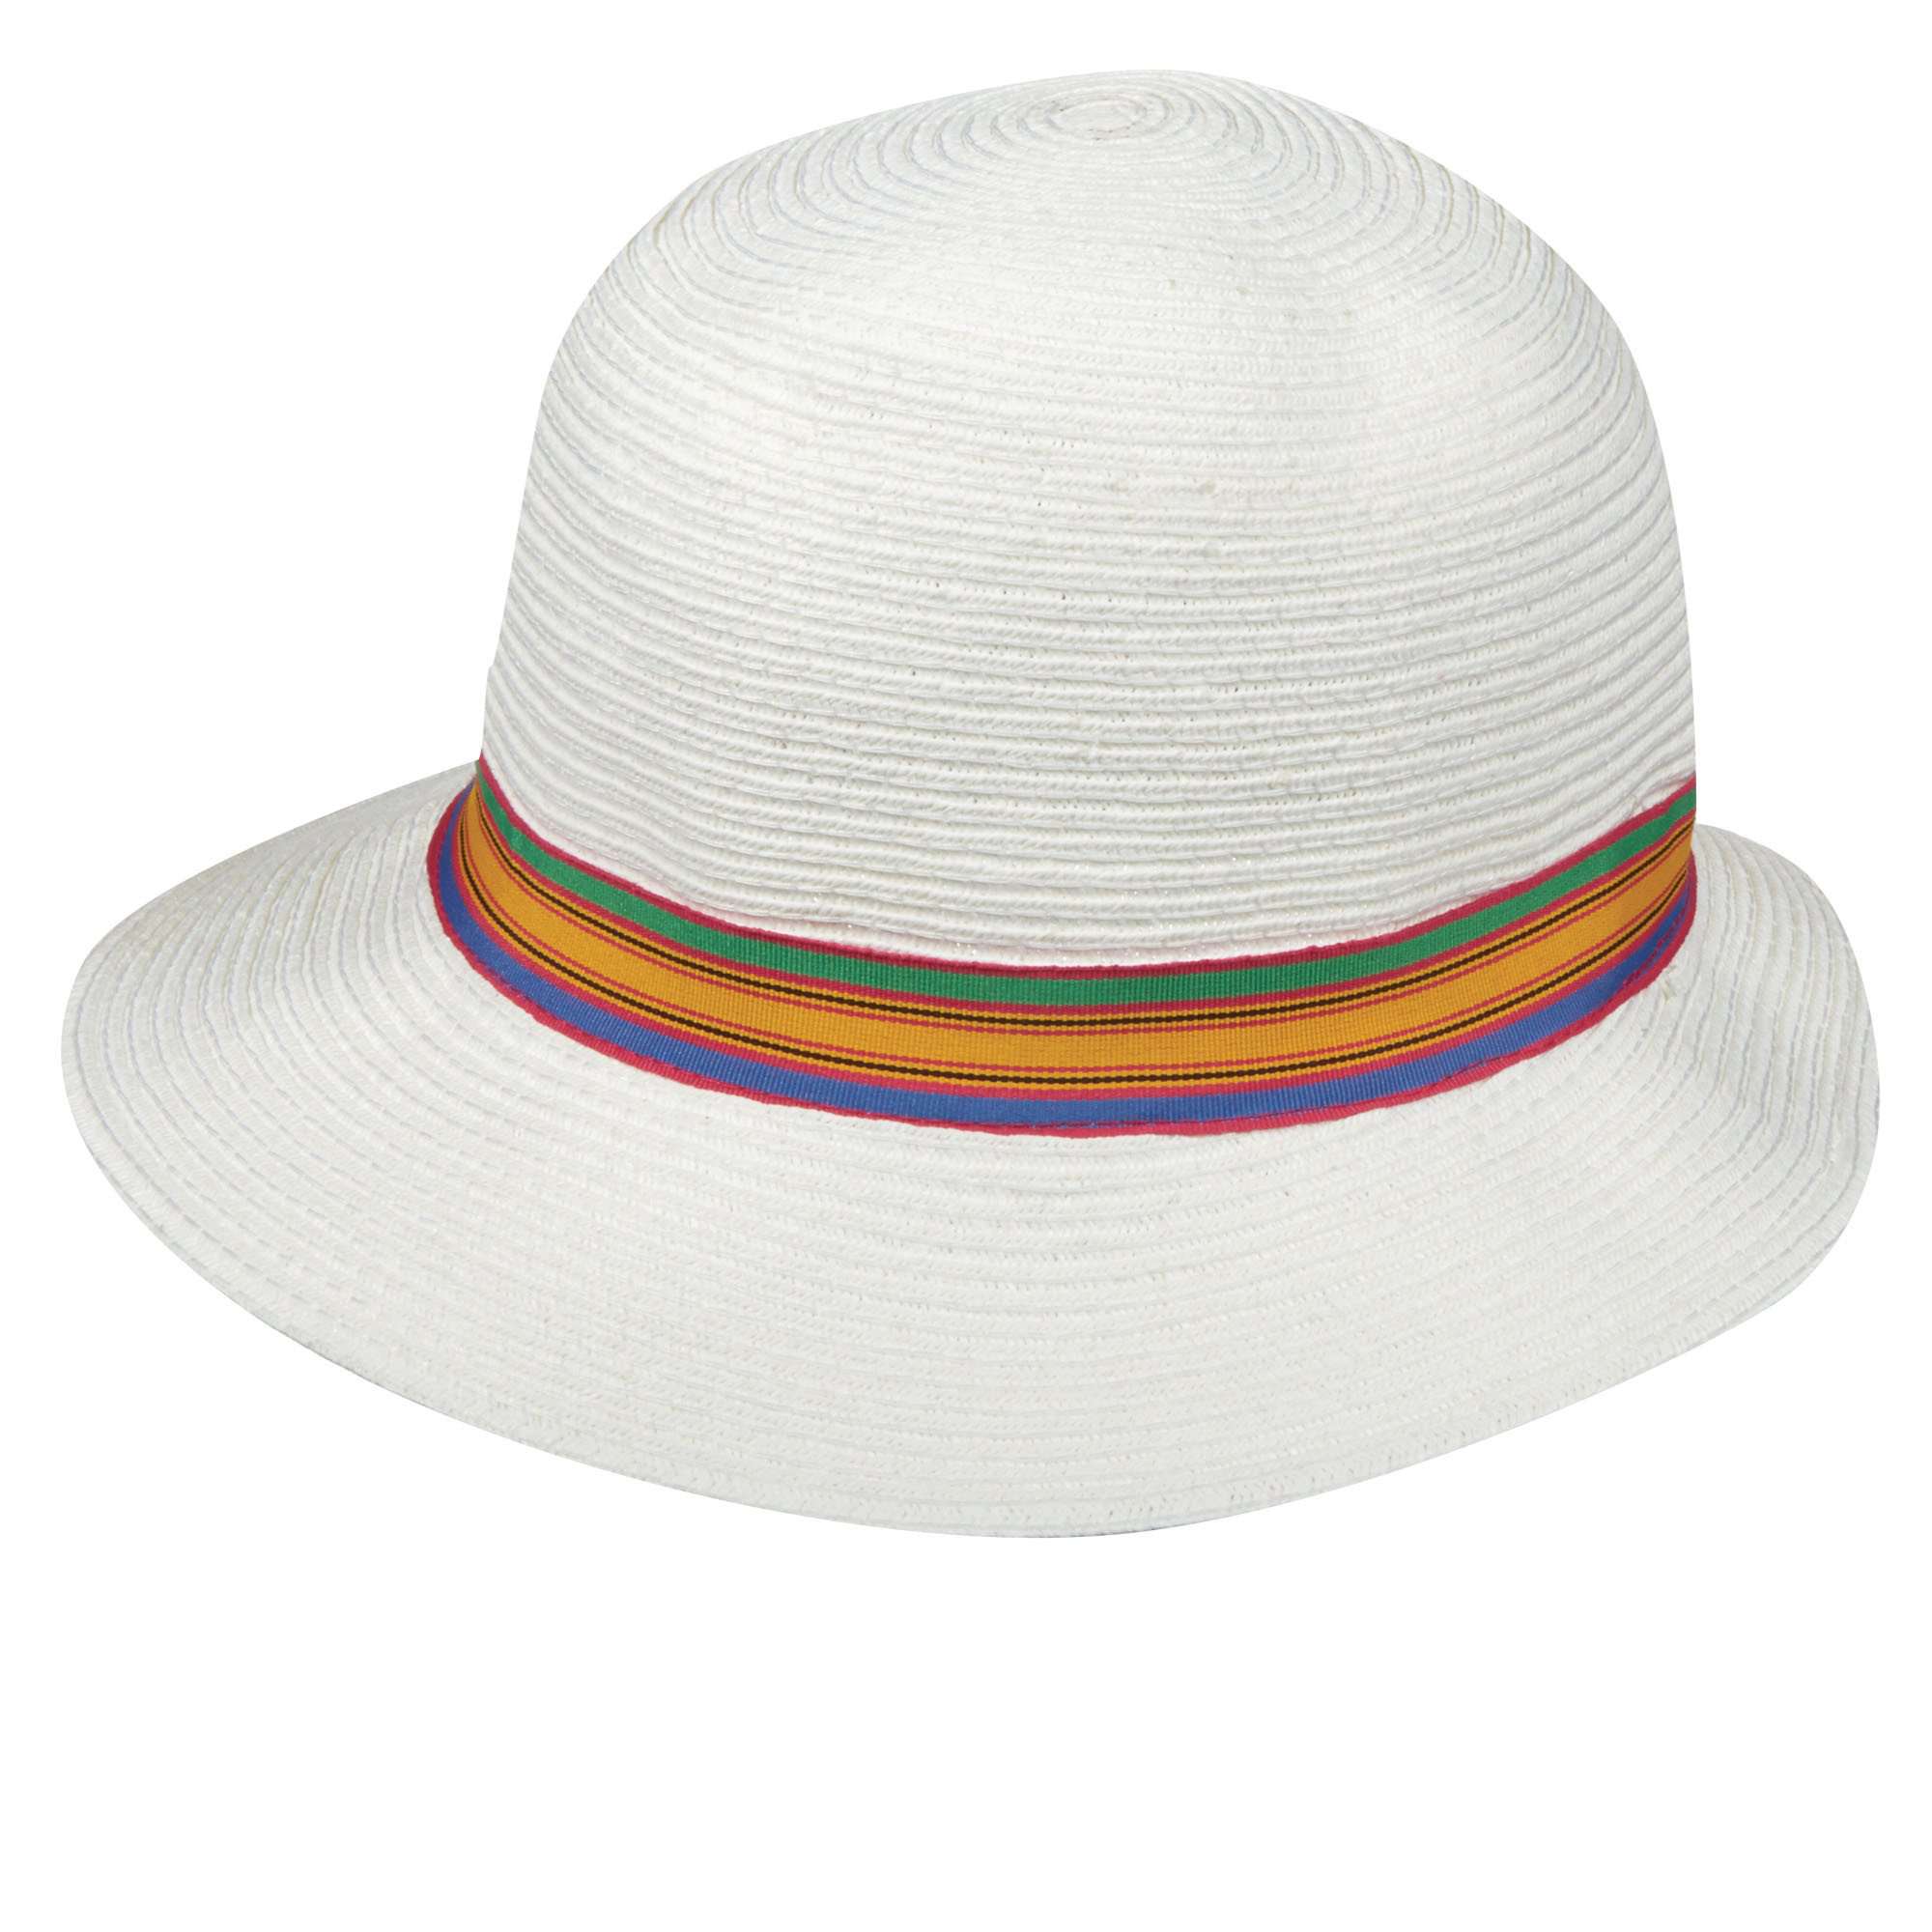 Tropical Trends Wavy Brim Cloche Cloche Dorfman Hat Co. WSlp186WH White  